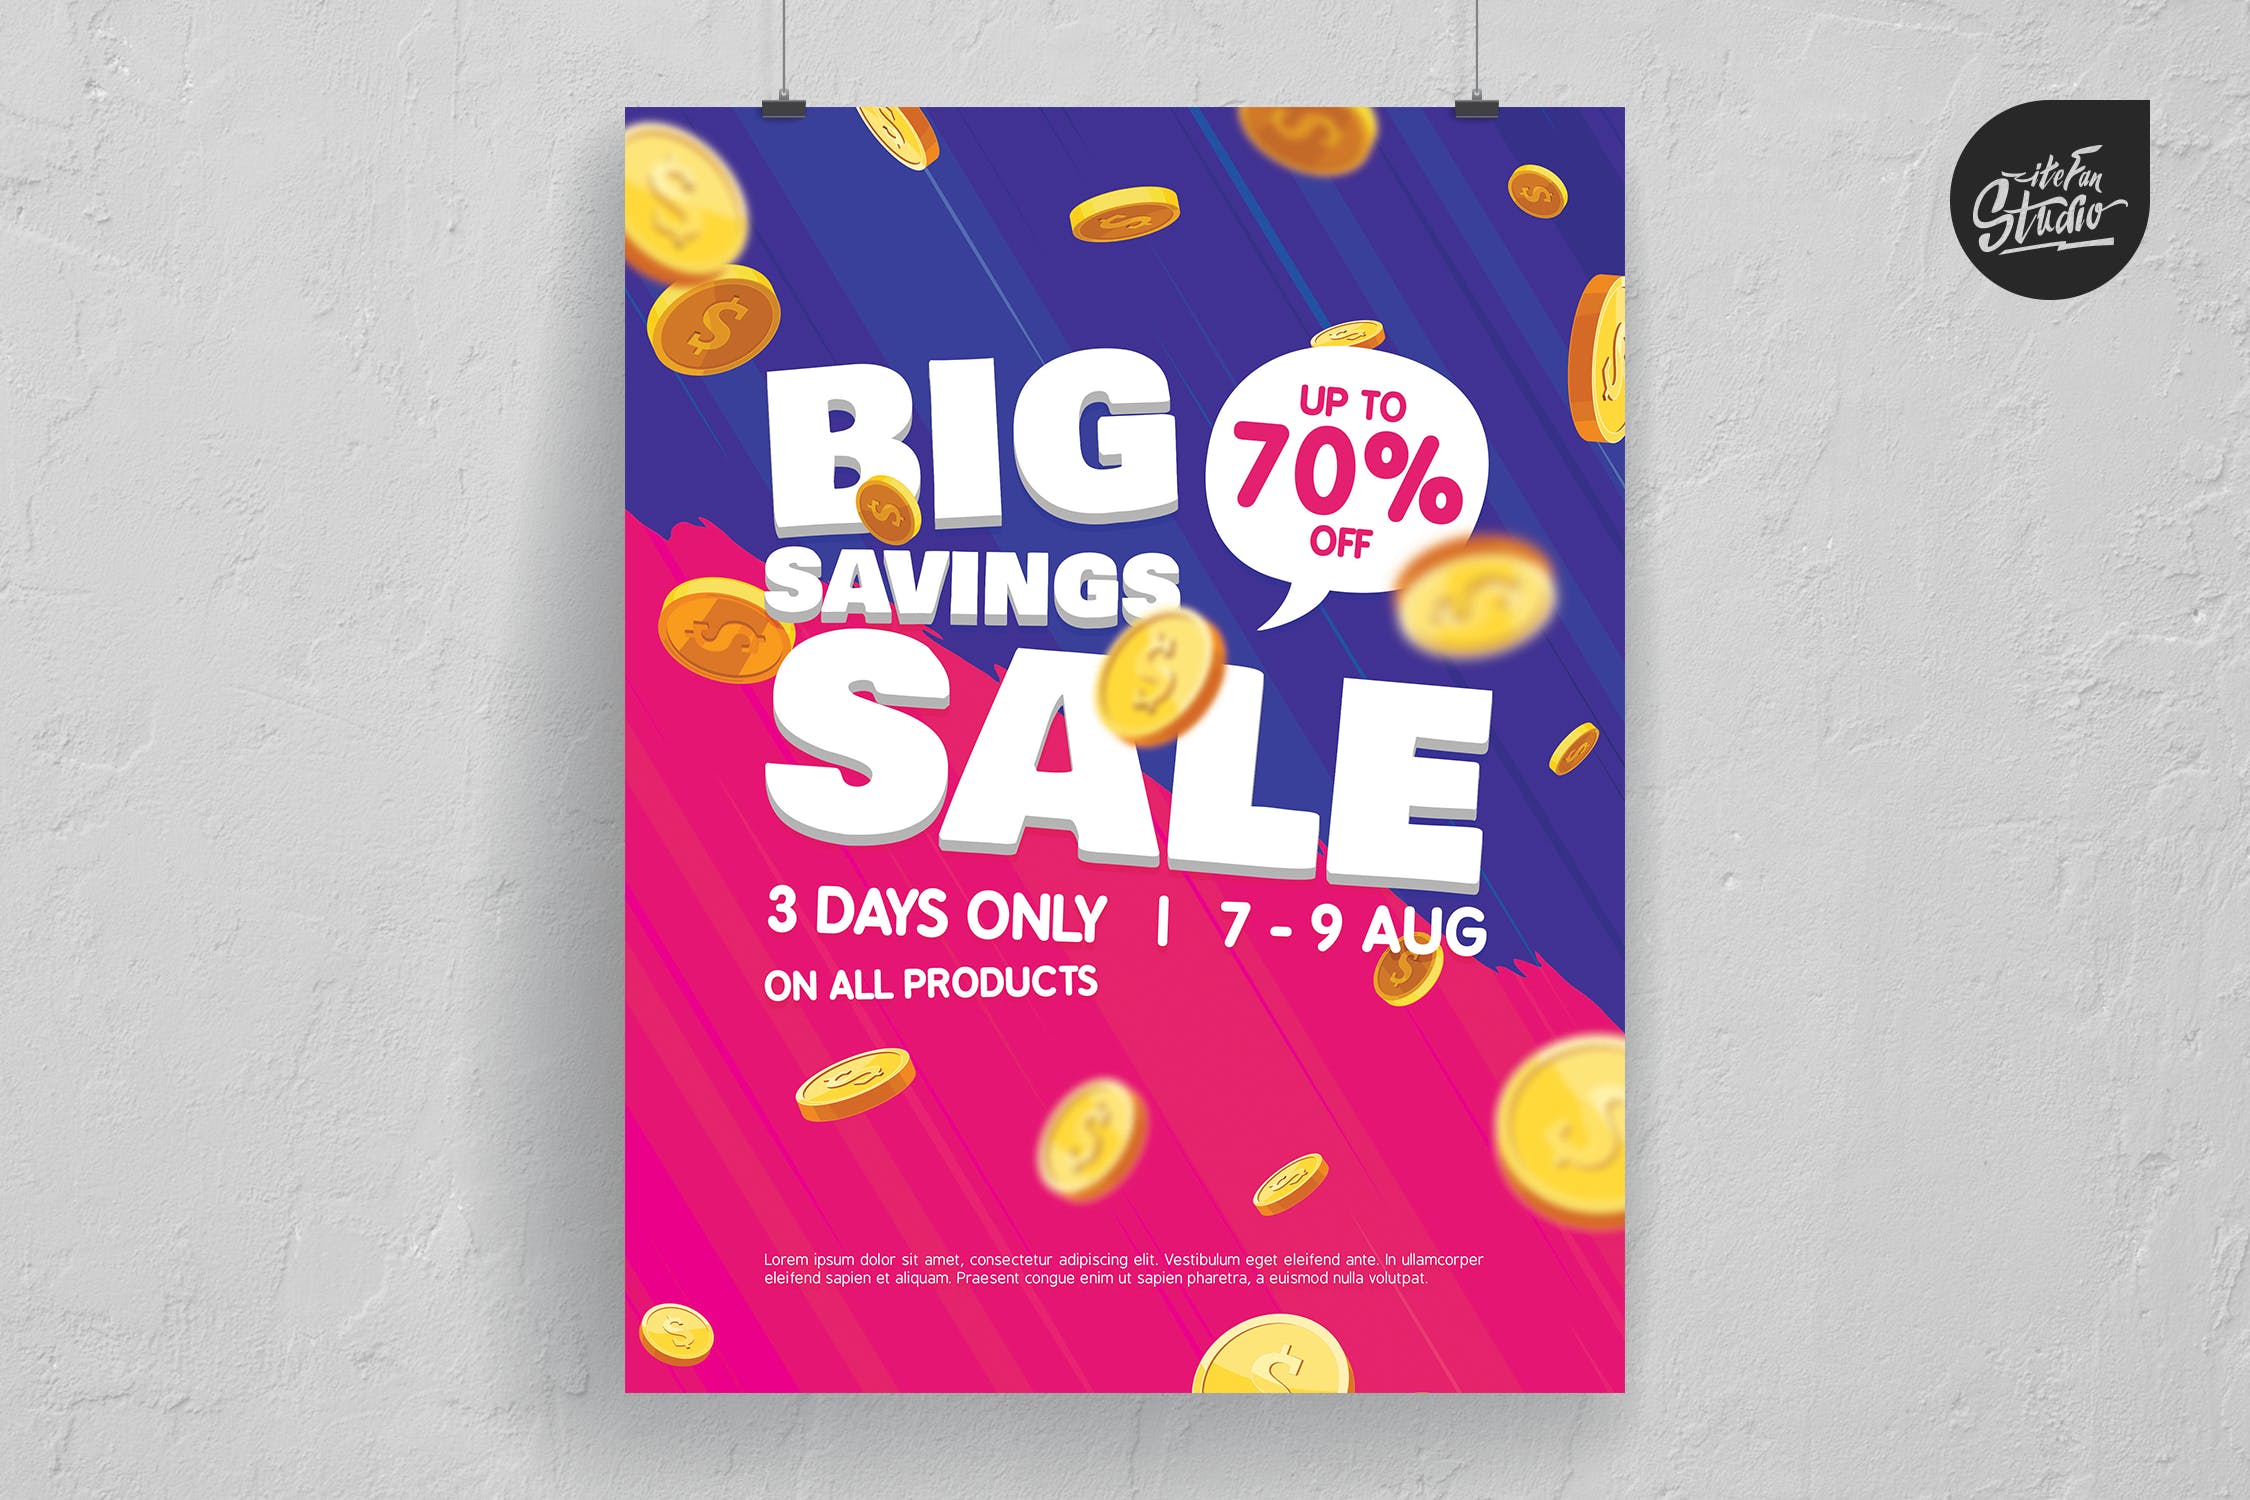 天降金币大型促销活动海报设计模板 Falling Coins Big Savings Sale Poster And Flyer插图